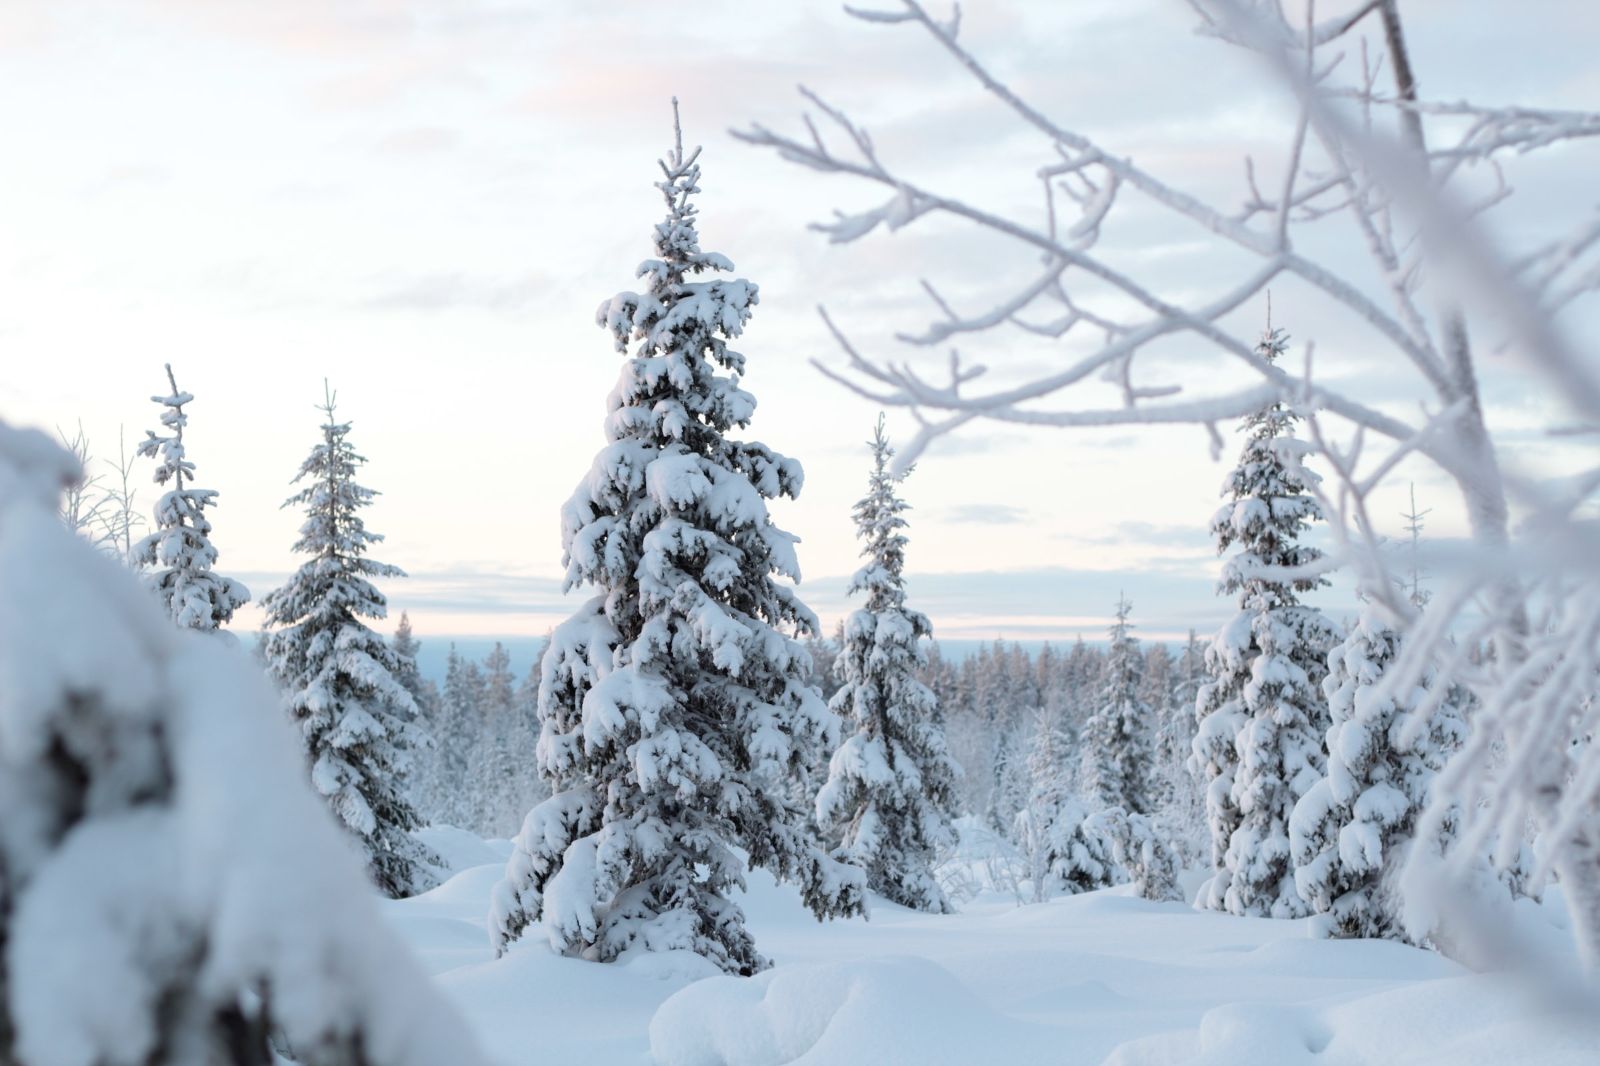 Frozen trees in Lapland, Finland